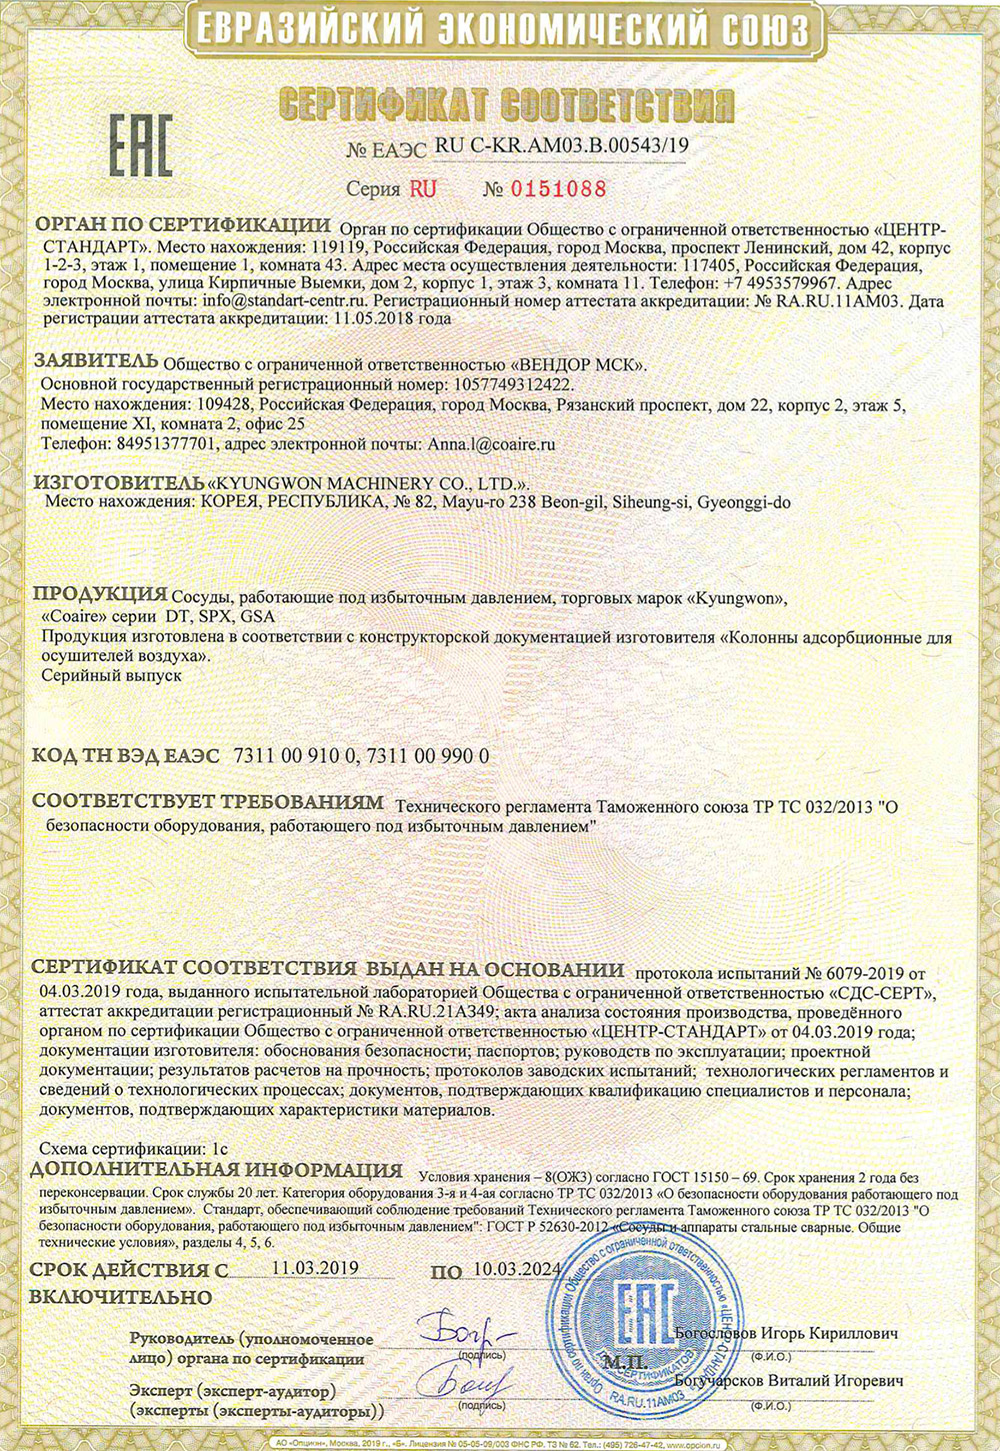 Certificate of the Eurasian Economic Union (EAEU)